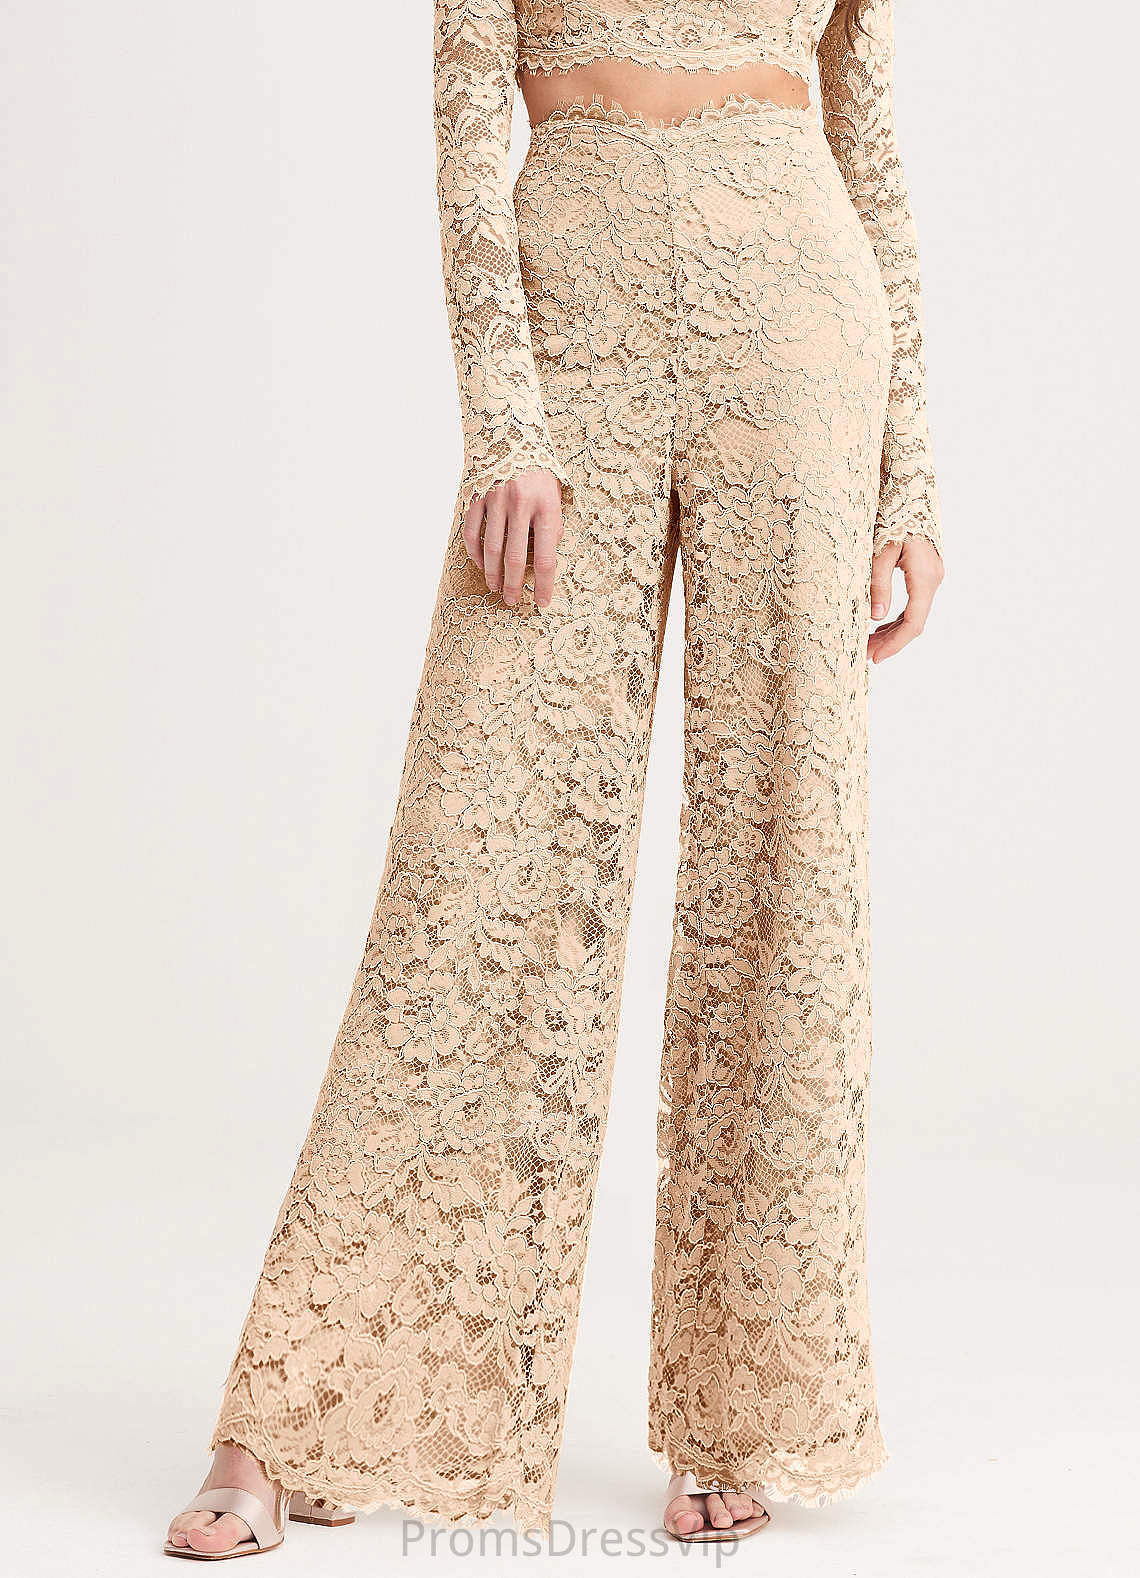 Lesley Natural Waist V-Neck Sleeveless Floor Length A-Line/Princess Bridesmaid Dresses